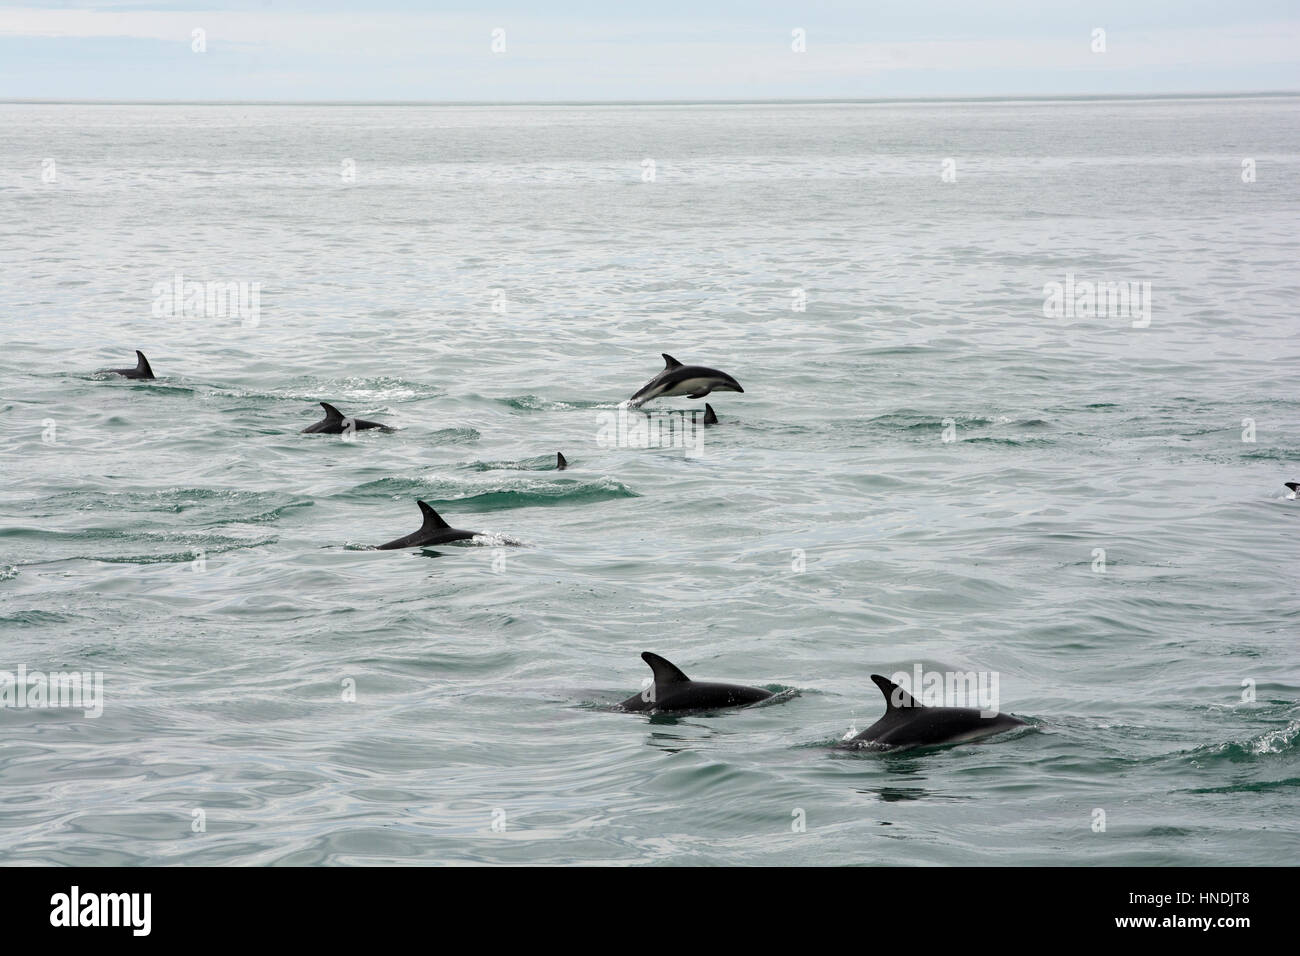 Dusky Dolphin pod swimming in the Pacific Ocean just off the coast near Kaikoura in New Zealand.  Eine Schule Schwarzdelfine schwimmt im Pazifik in de Stock Photo